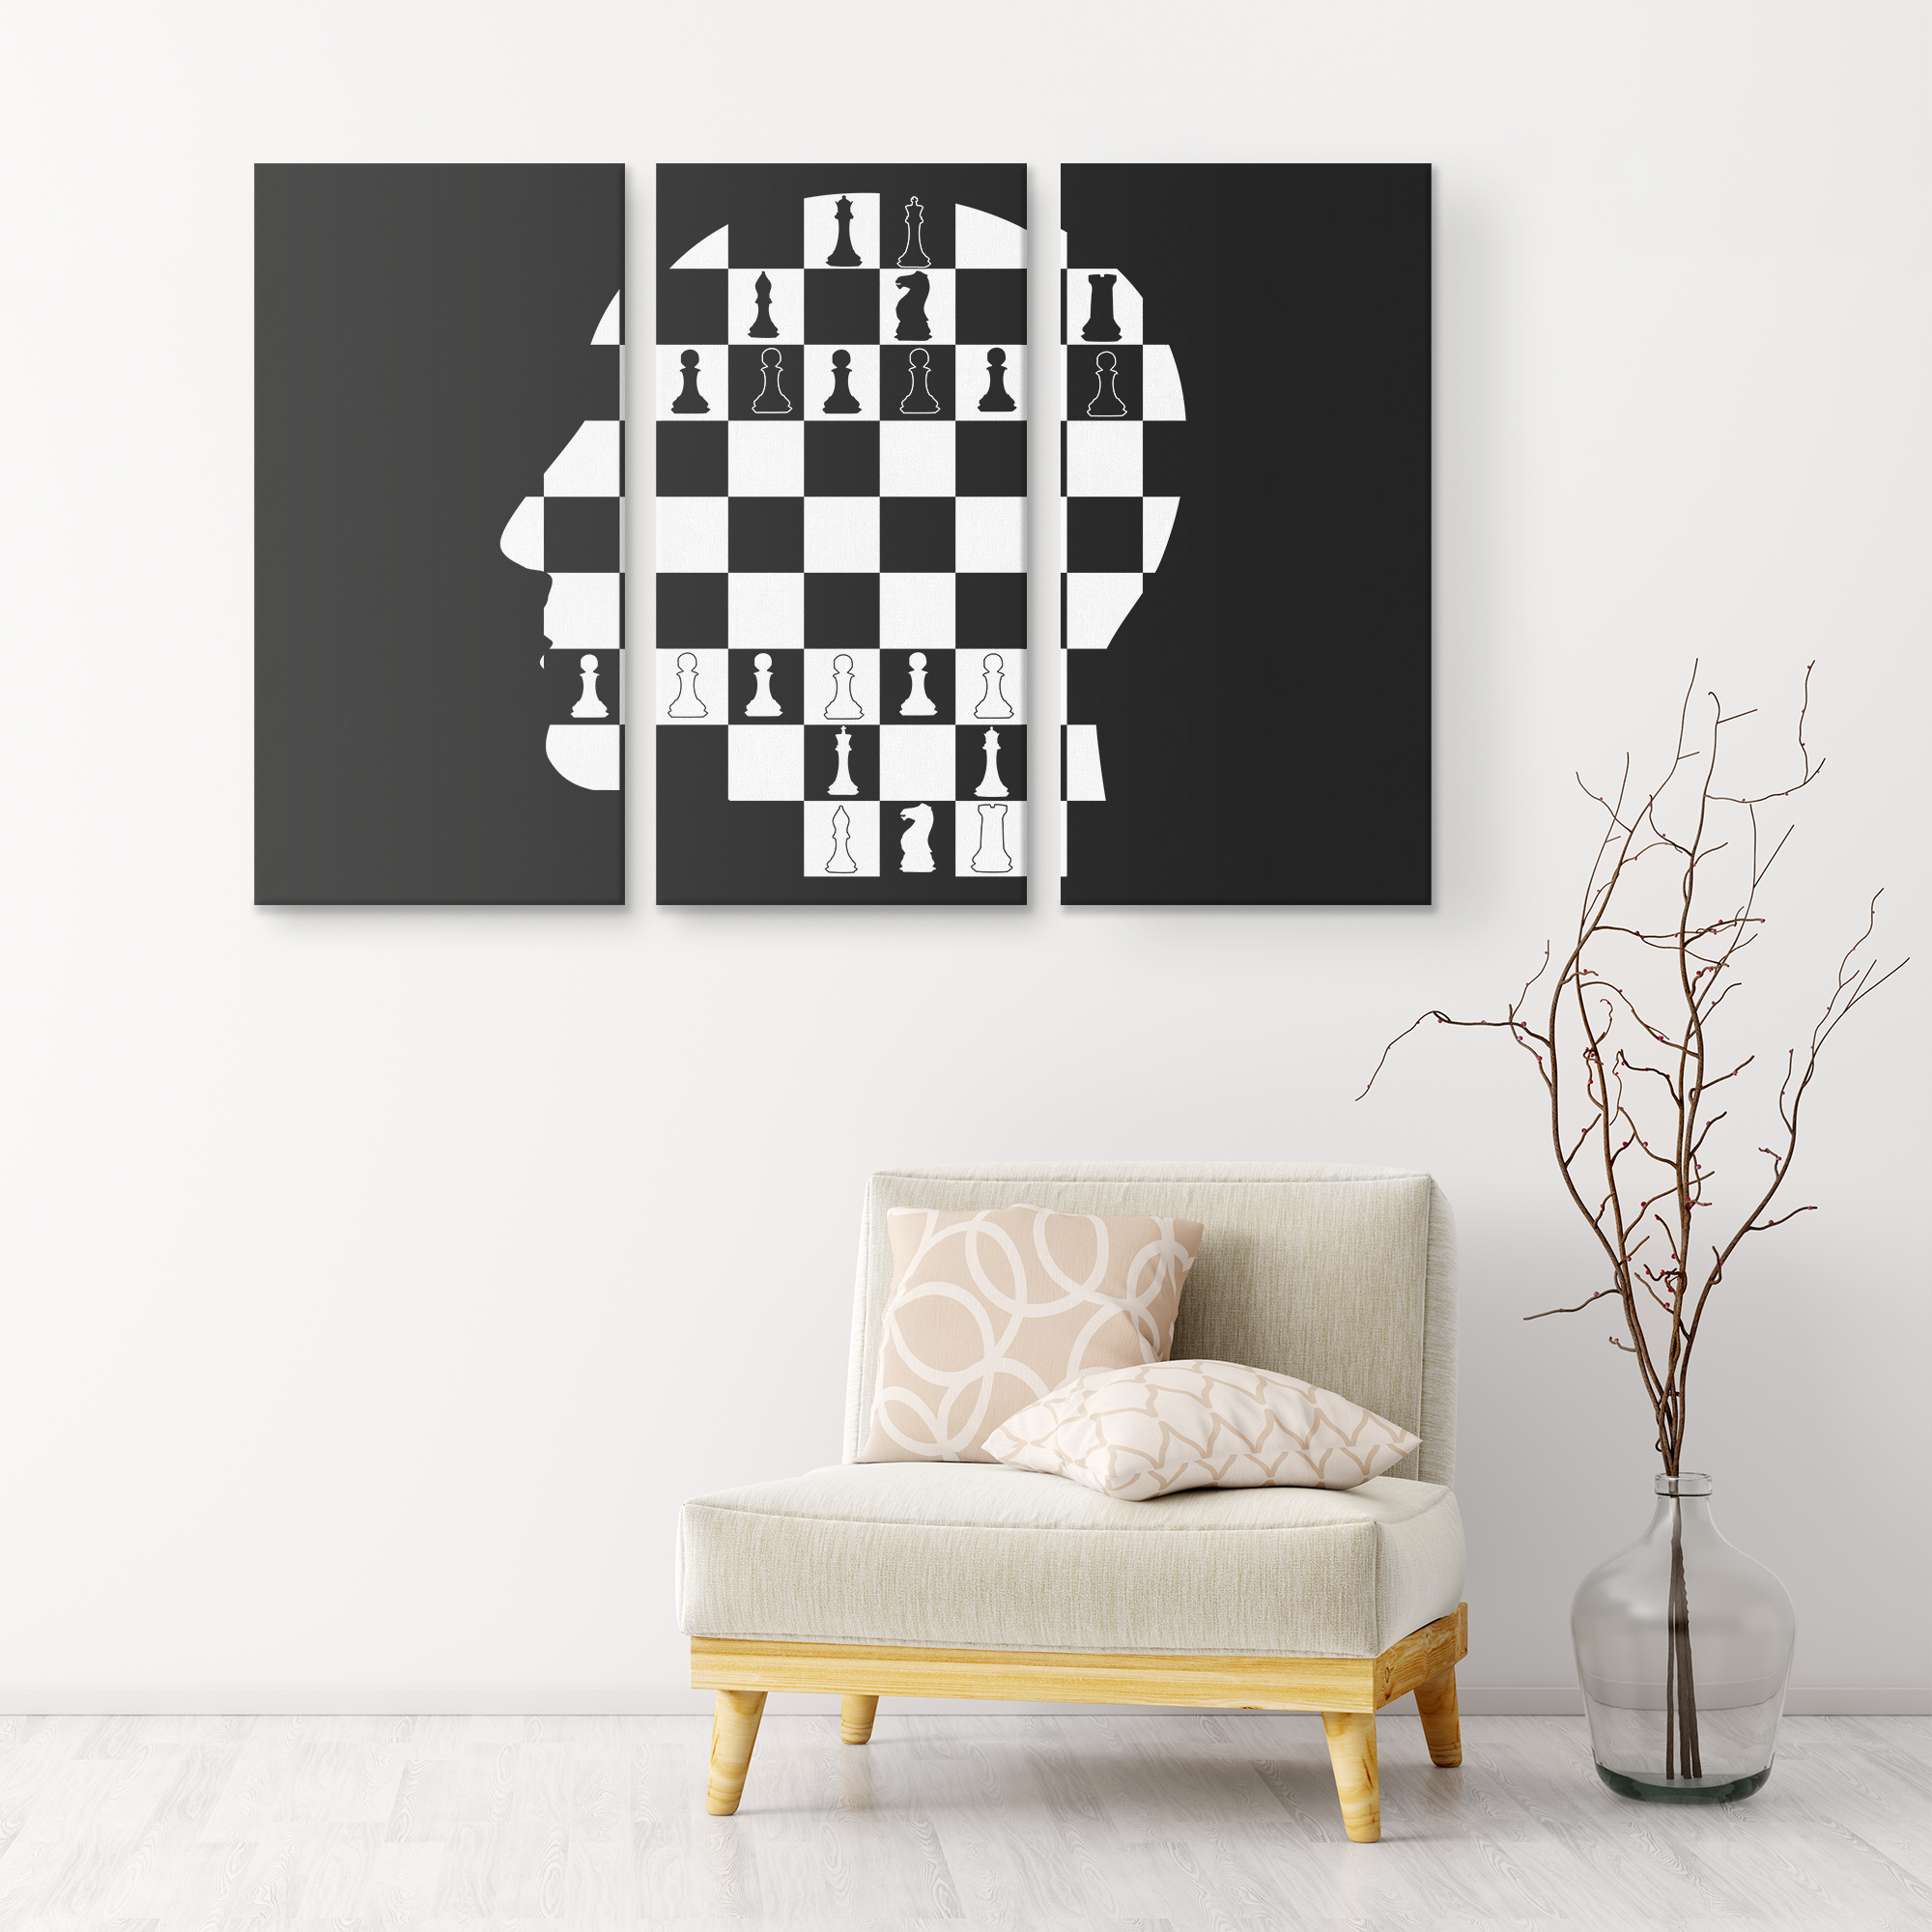 Cranium head chess board -  3 Piece Canvas wall art